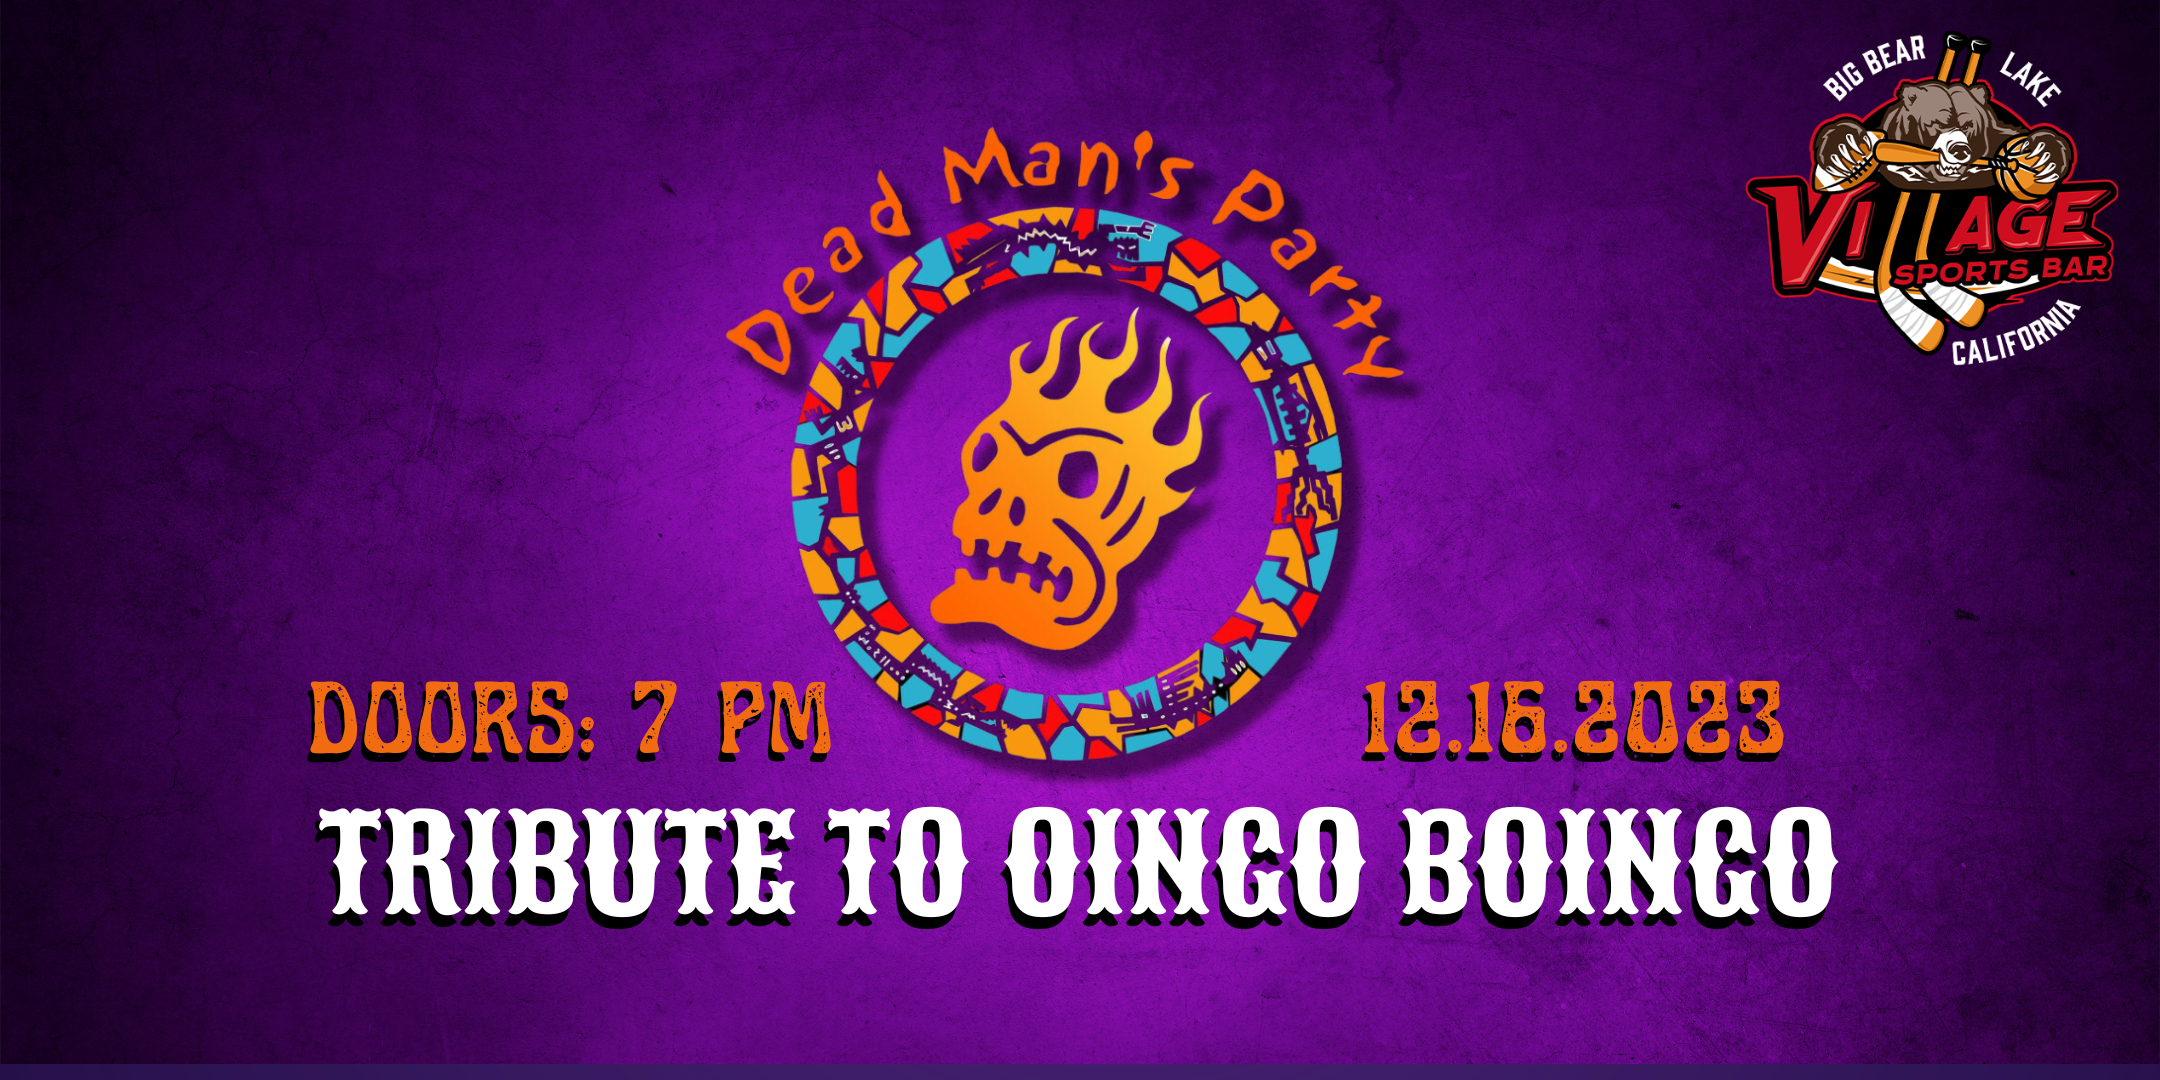 Village Sports Bar Presents: Dead Man's Party: Tribute to Oingo Boingo